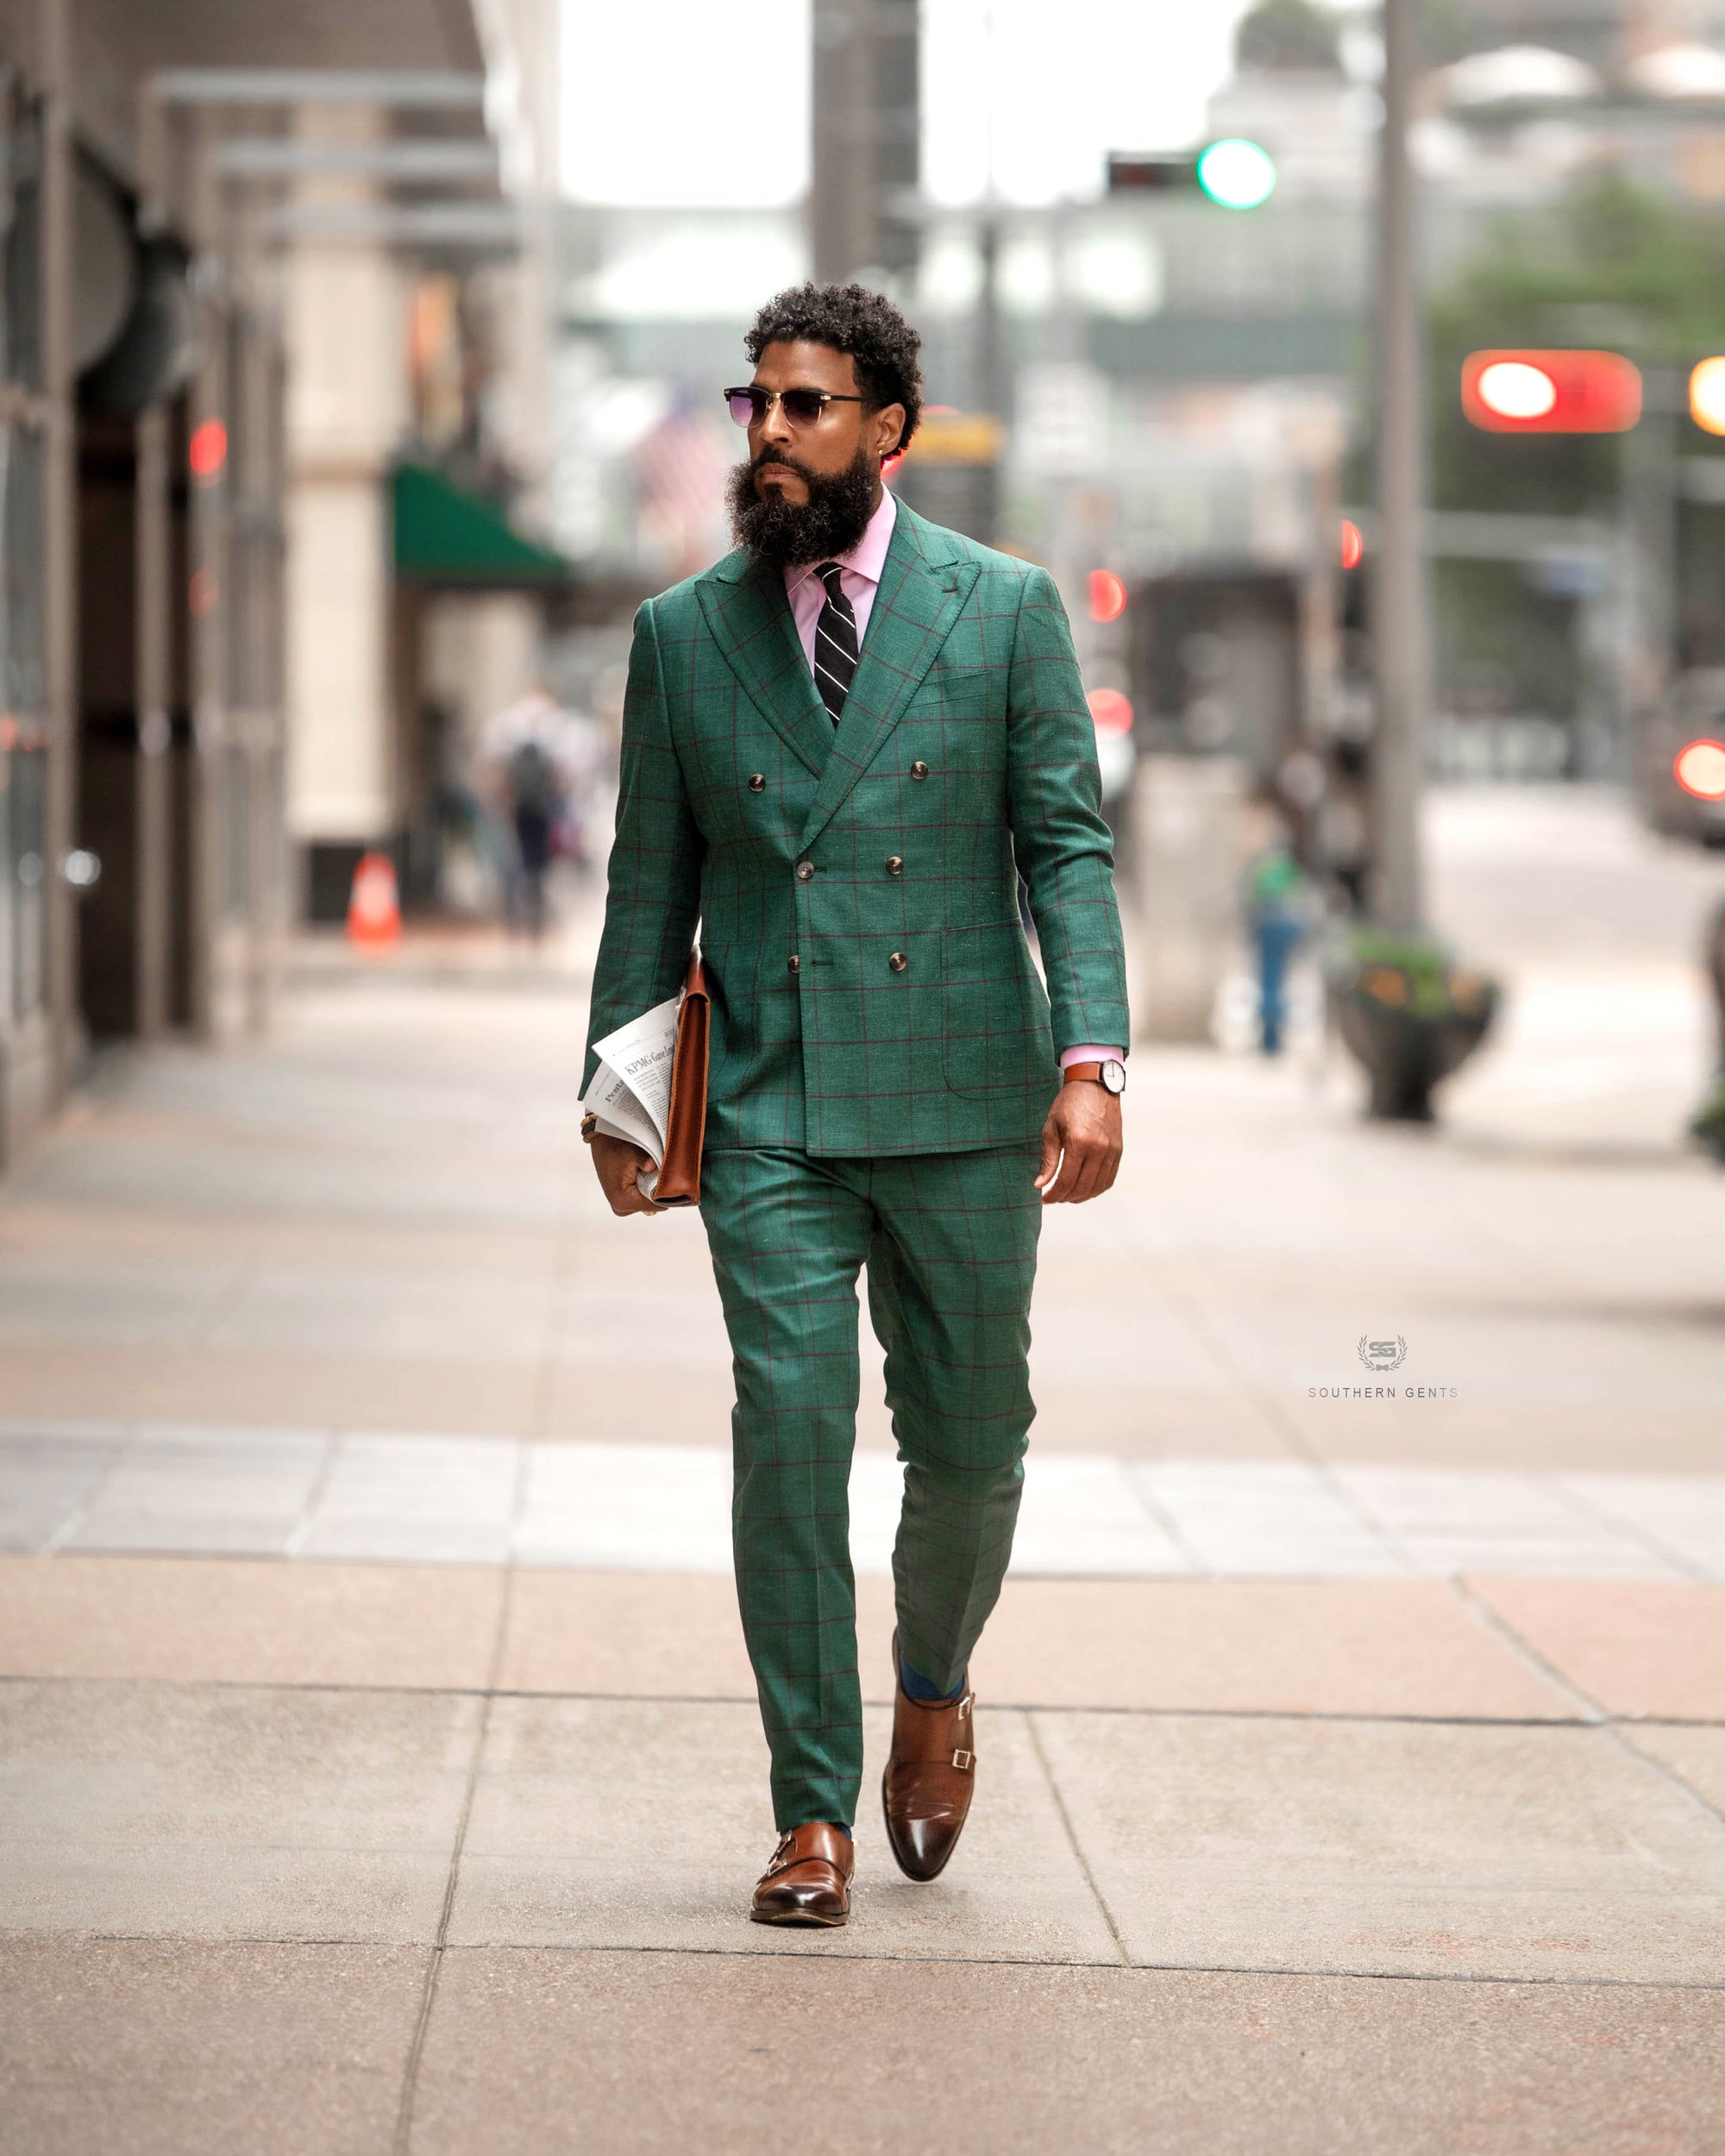 Gent light green blazer  Green jacket men, Suit jacket with jeans, Stylish  men casual